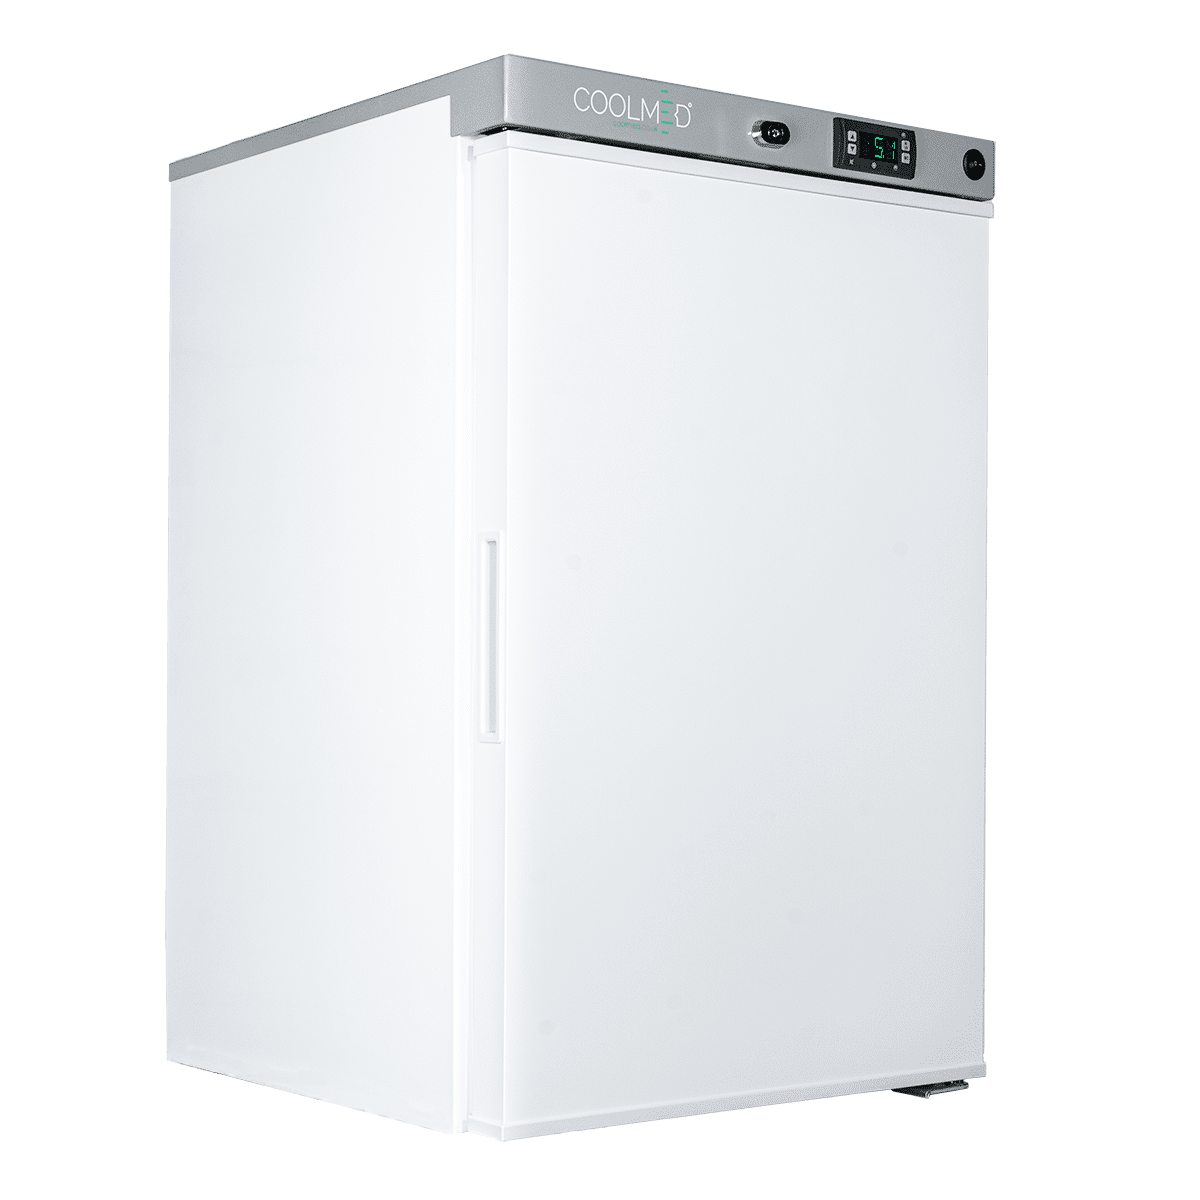 Solid Door Small Refrigerator CMS59 - CoolMed Ecommerce